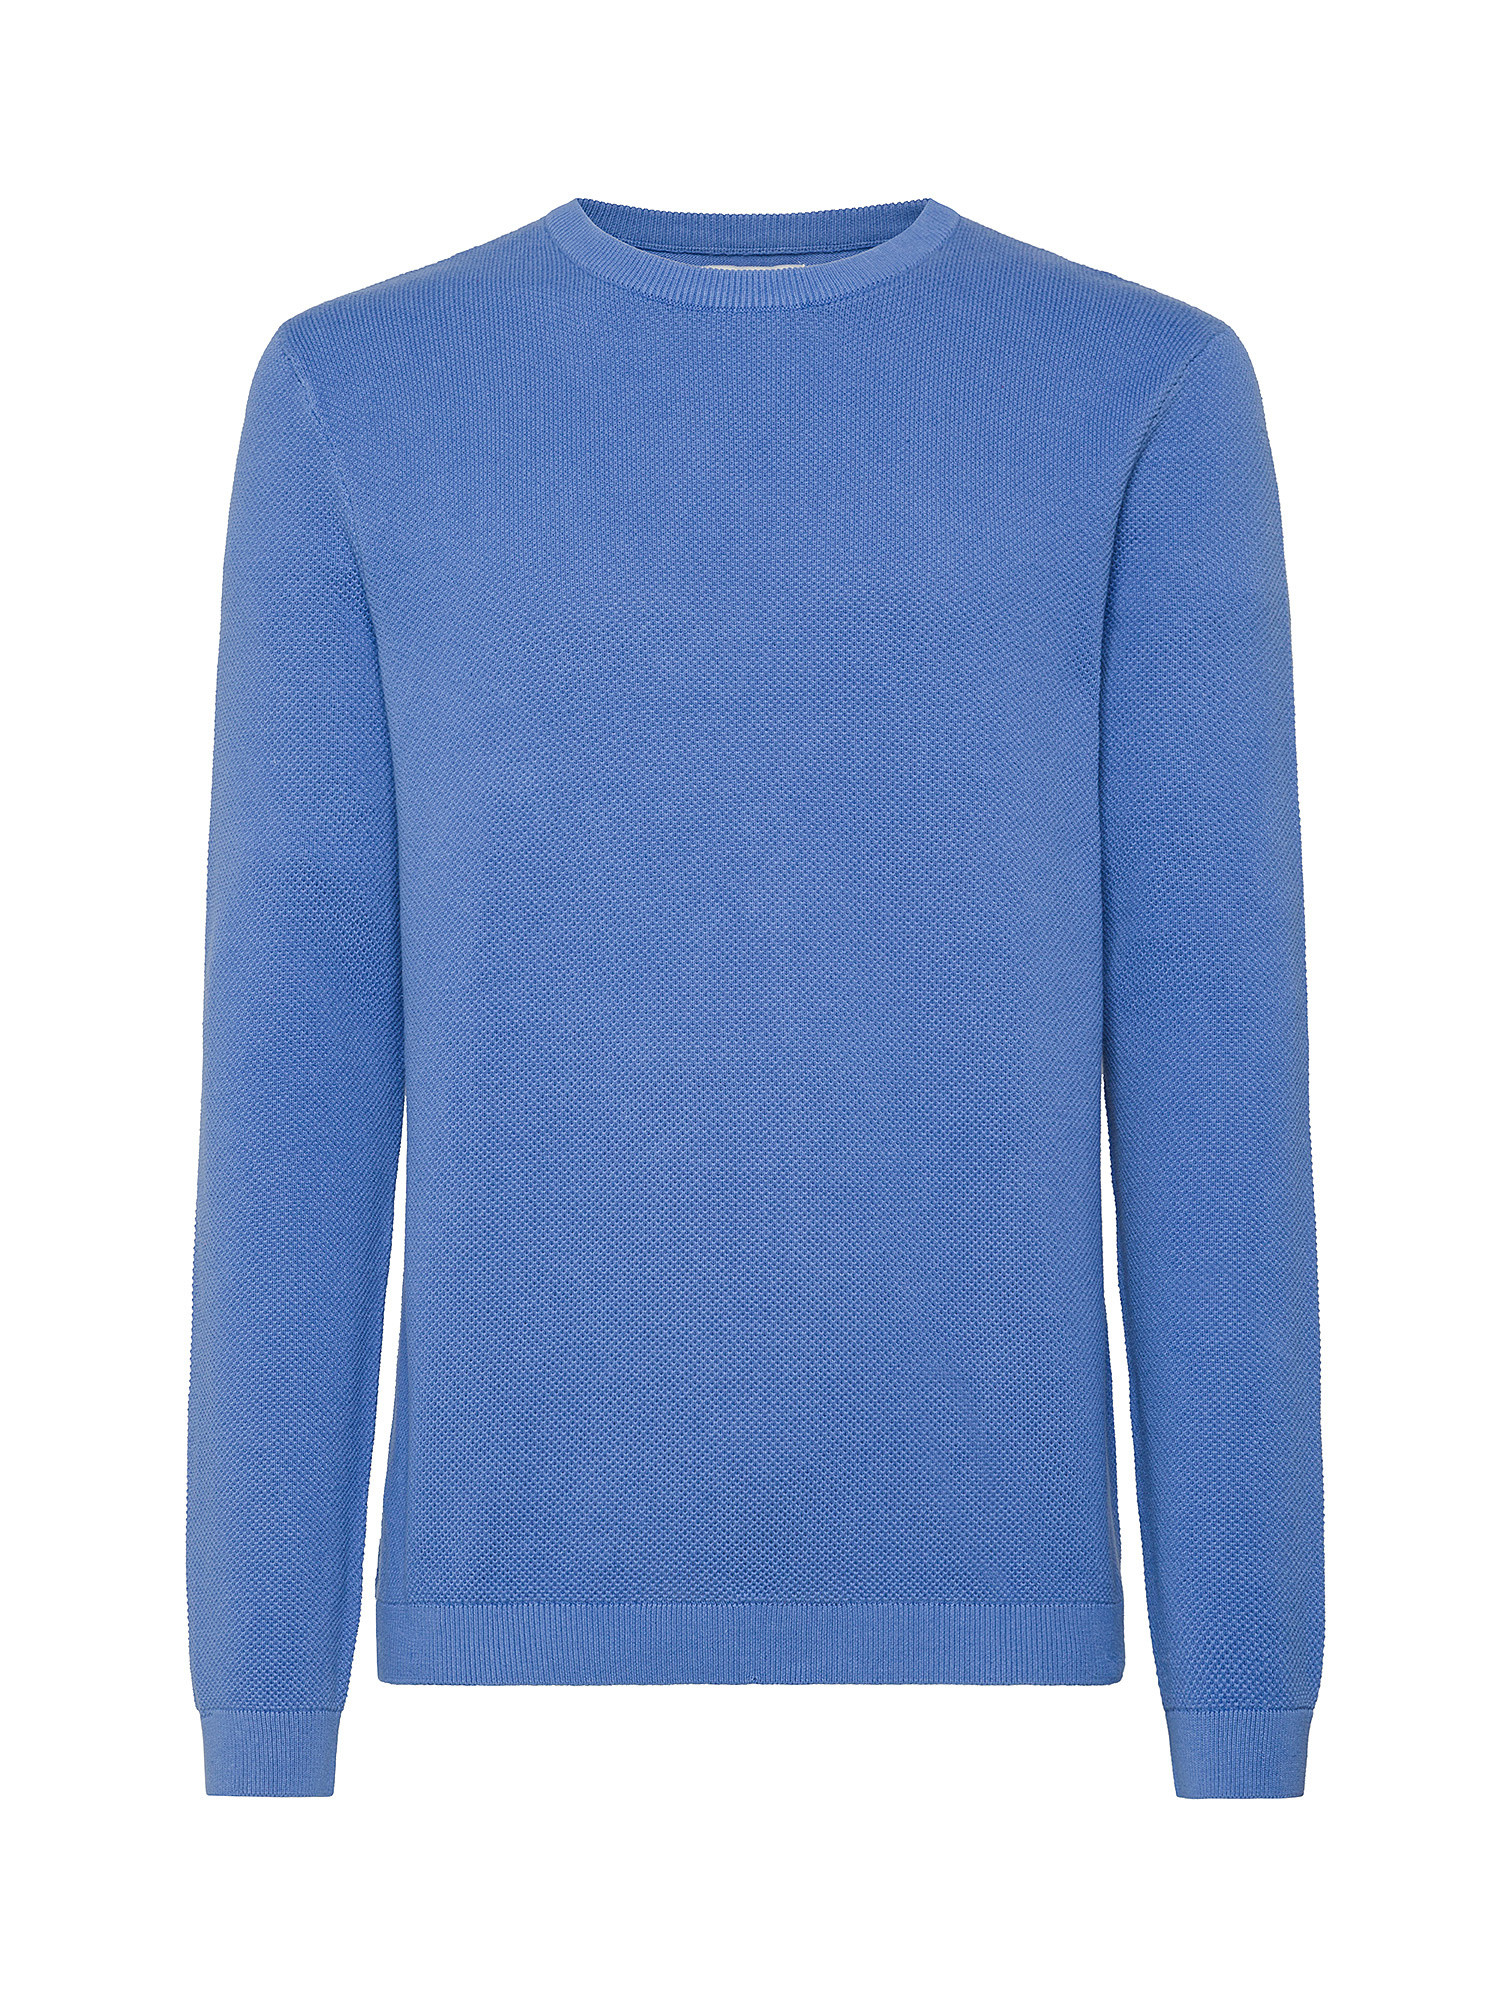 Luca D'Altieri - Crew neck sweater in pure cotton, Blue Dark, large image number 0